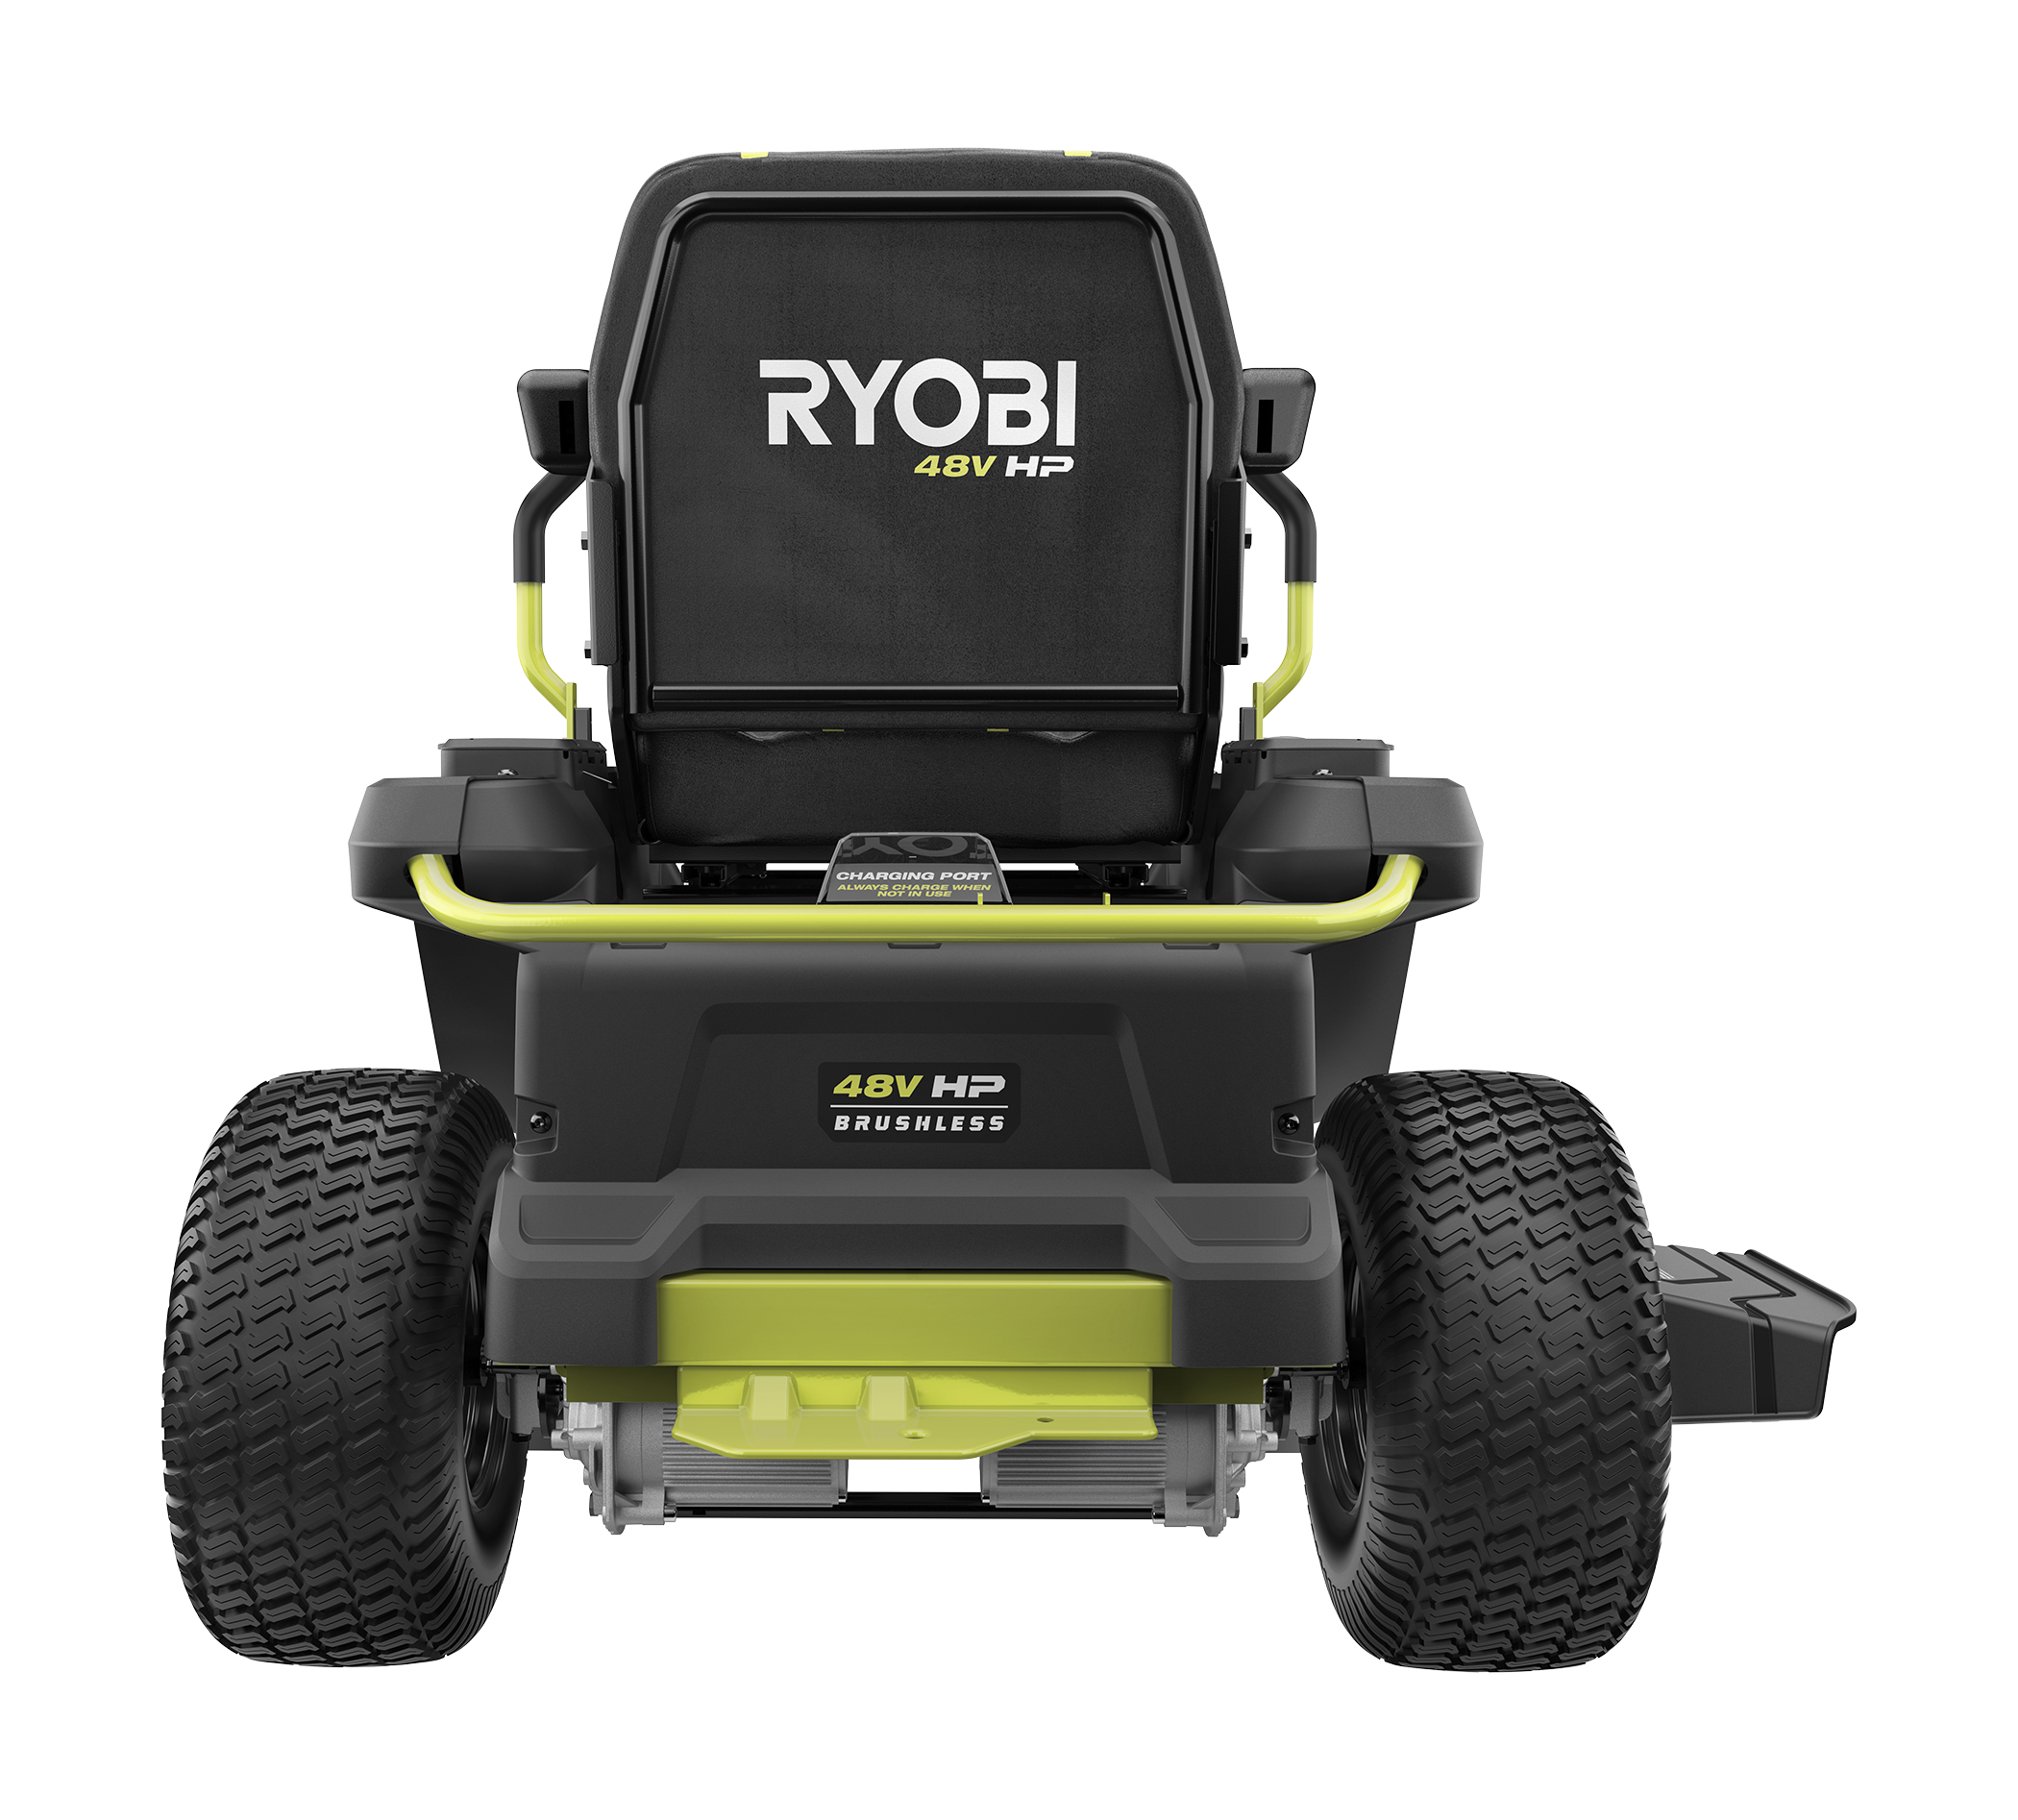 Ryobi 48V HP 54 Zero-Turn Mower Review - Tool Box Buzz Tool Box Buzz